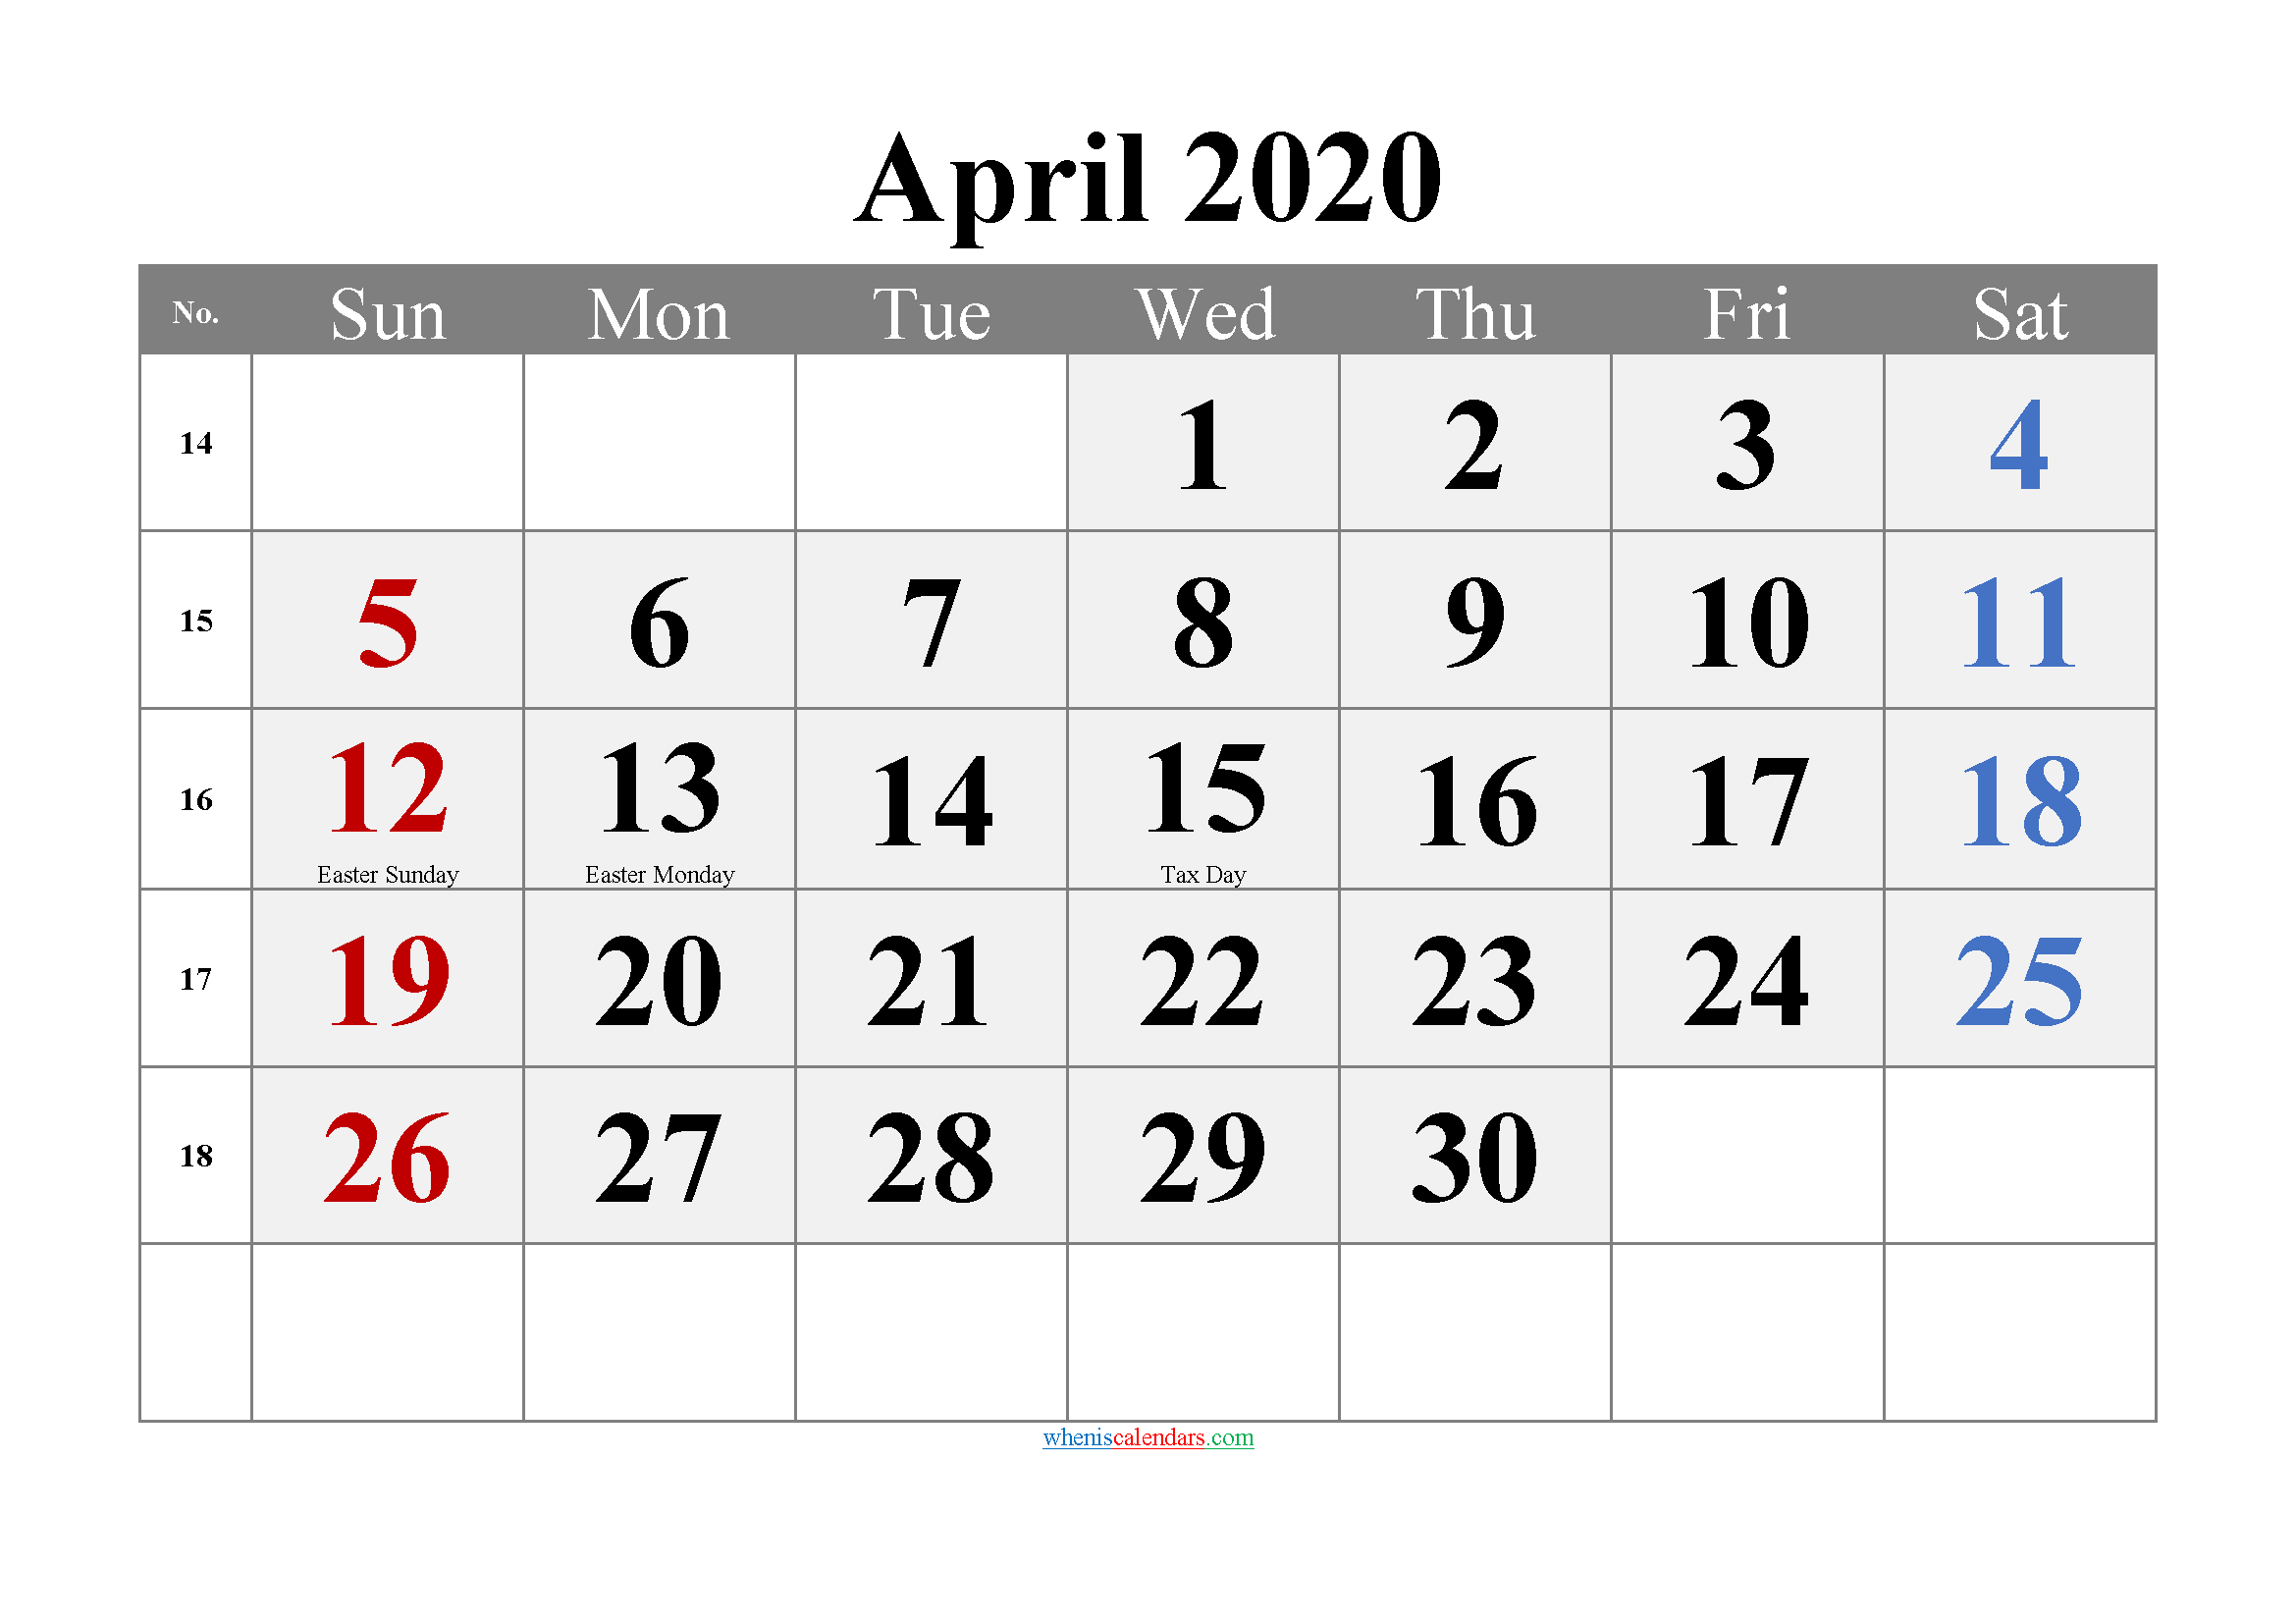 APRIL 2020 Printable Calendar with Holidays